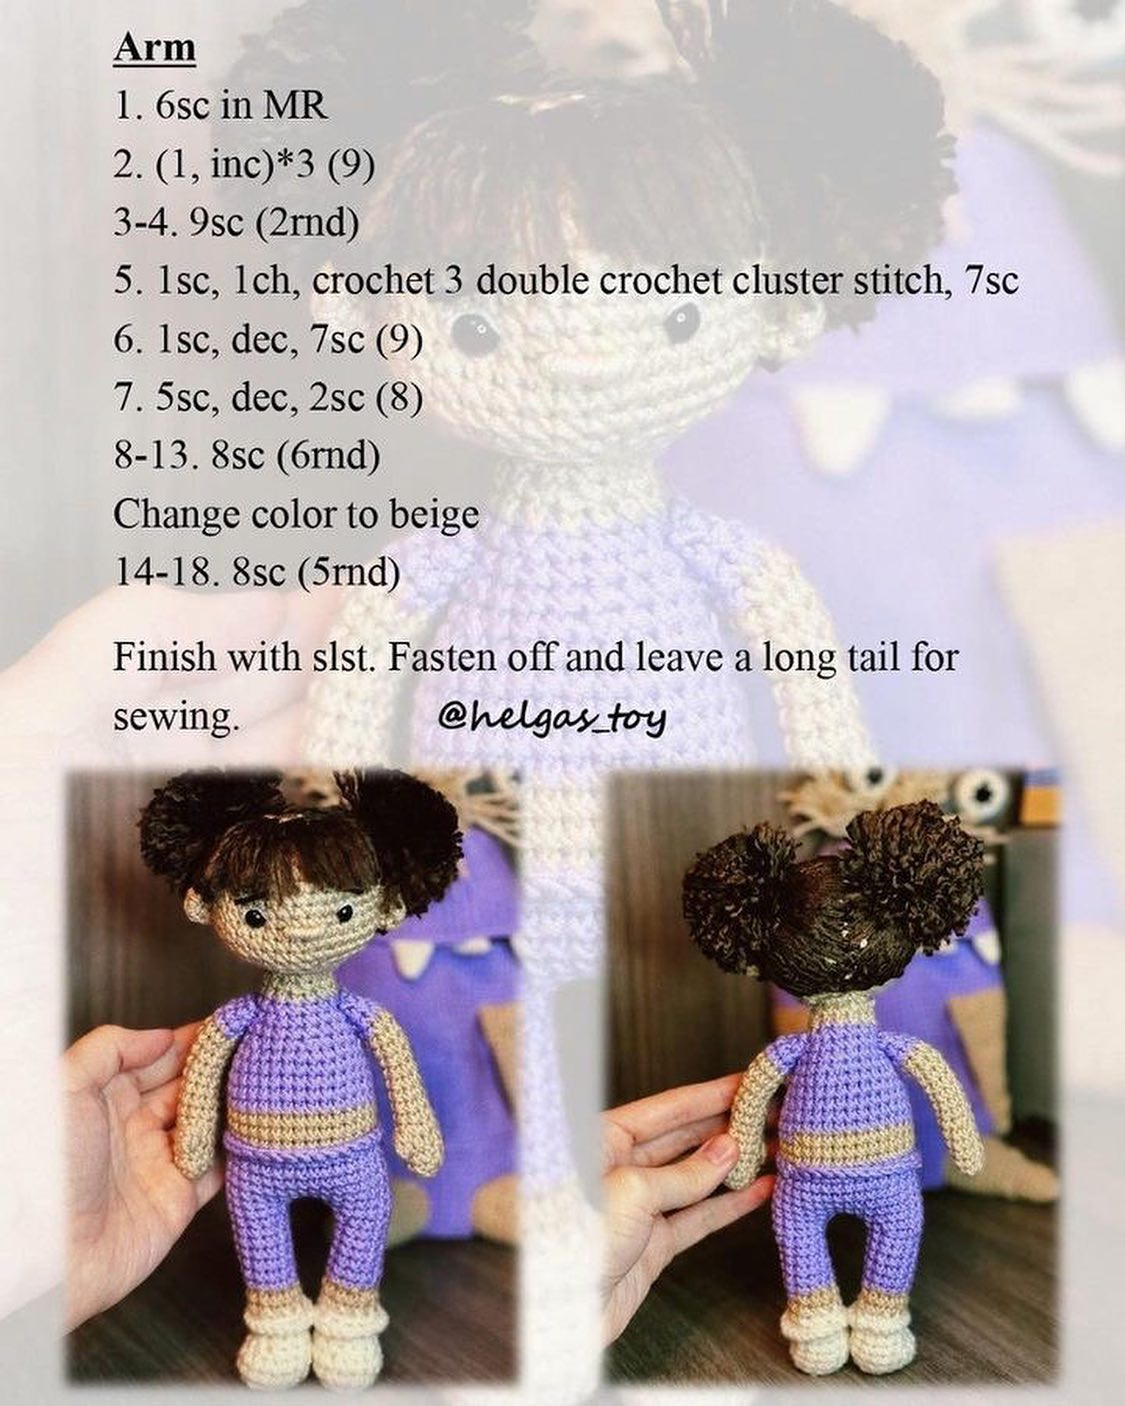 Black hair doll crochet pattern wearing purple shirt and pants